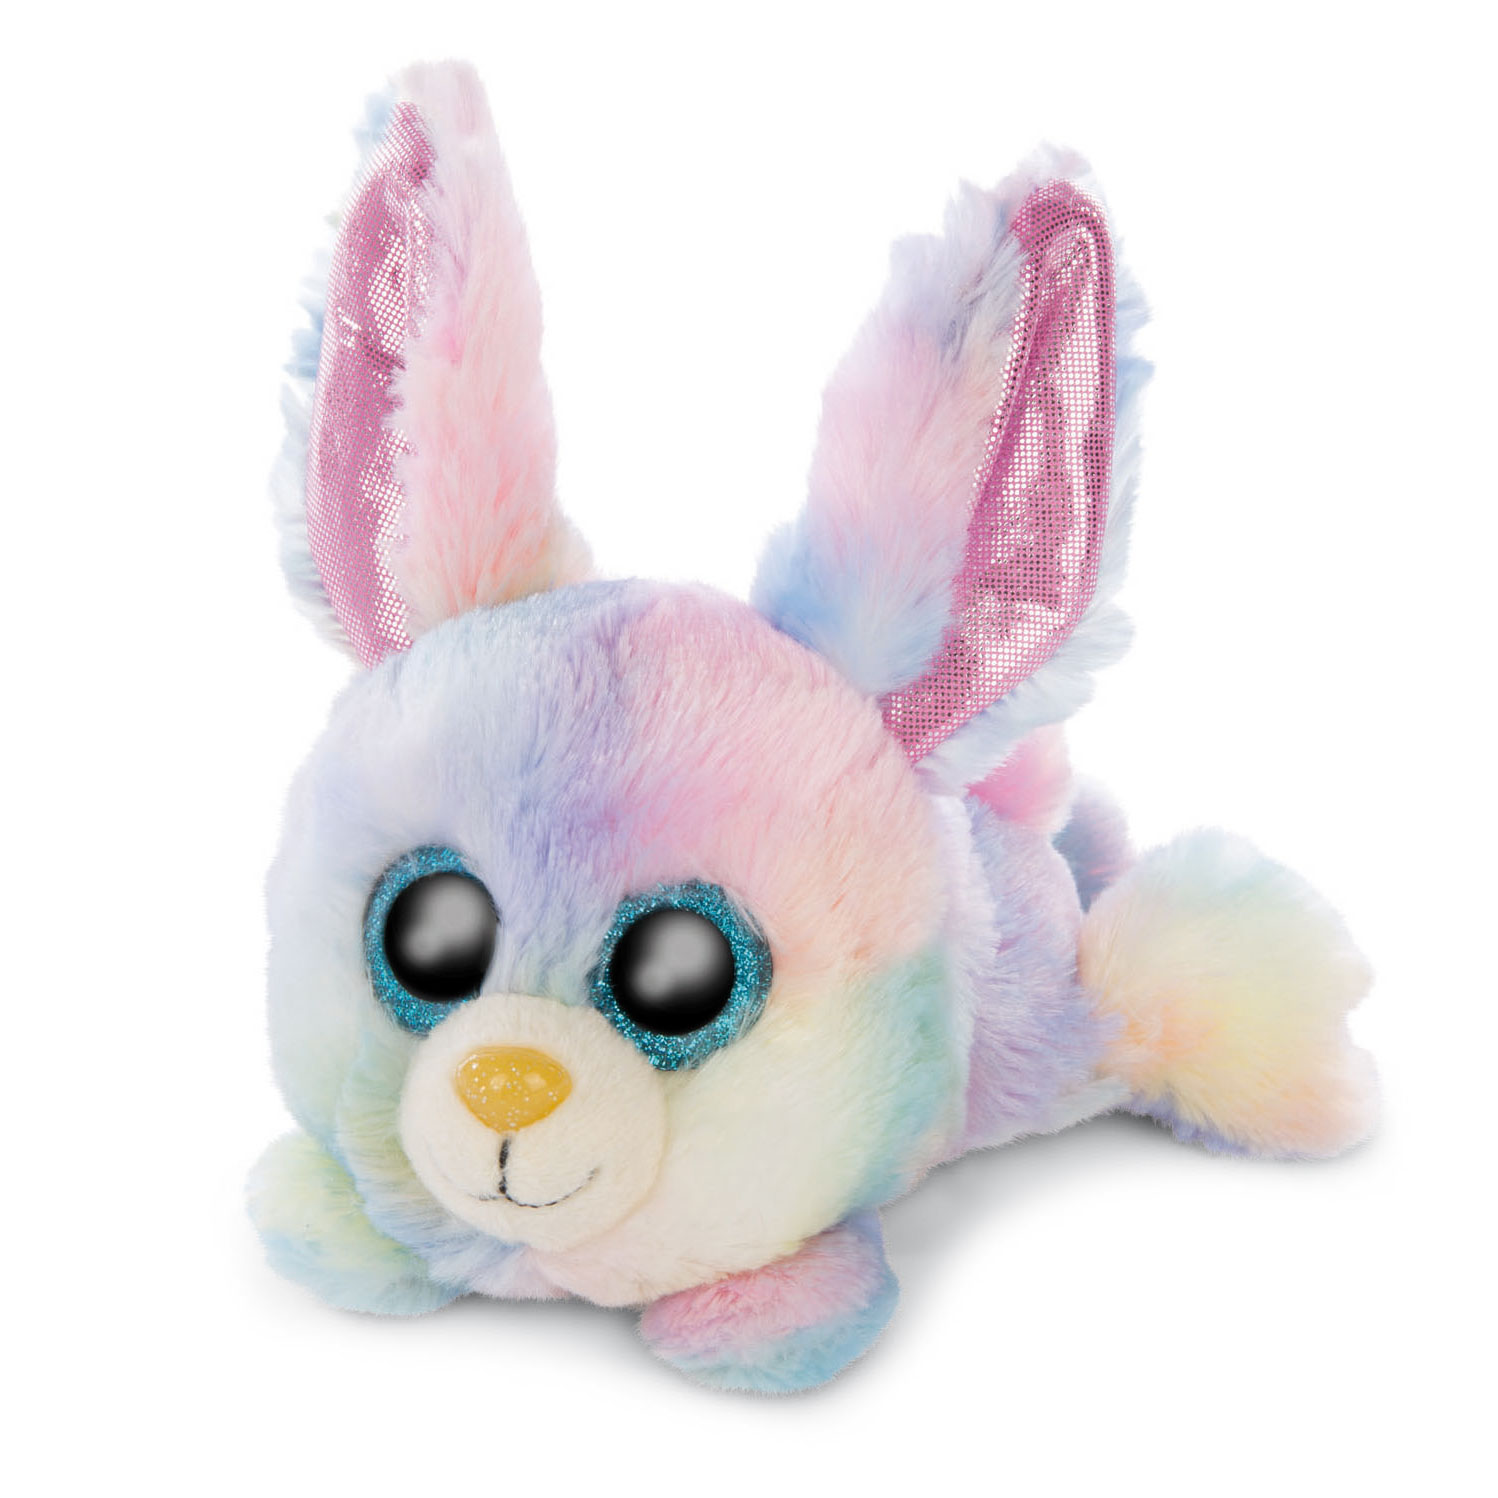 NICI Glubschis knuffel liggende konijn Rainbow Candy 15cm